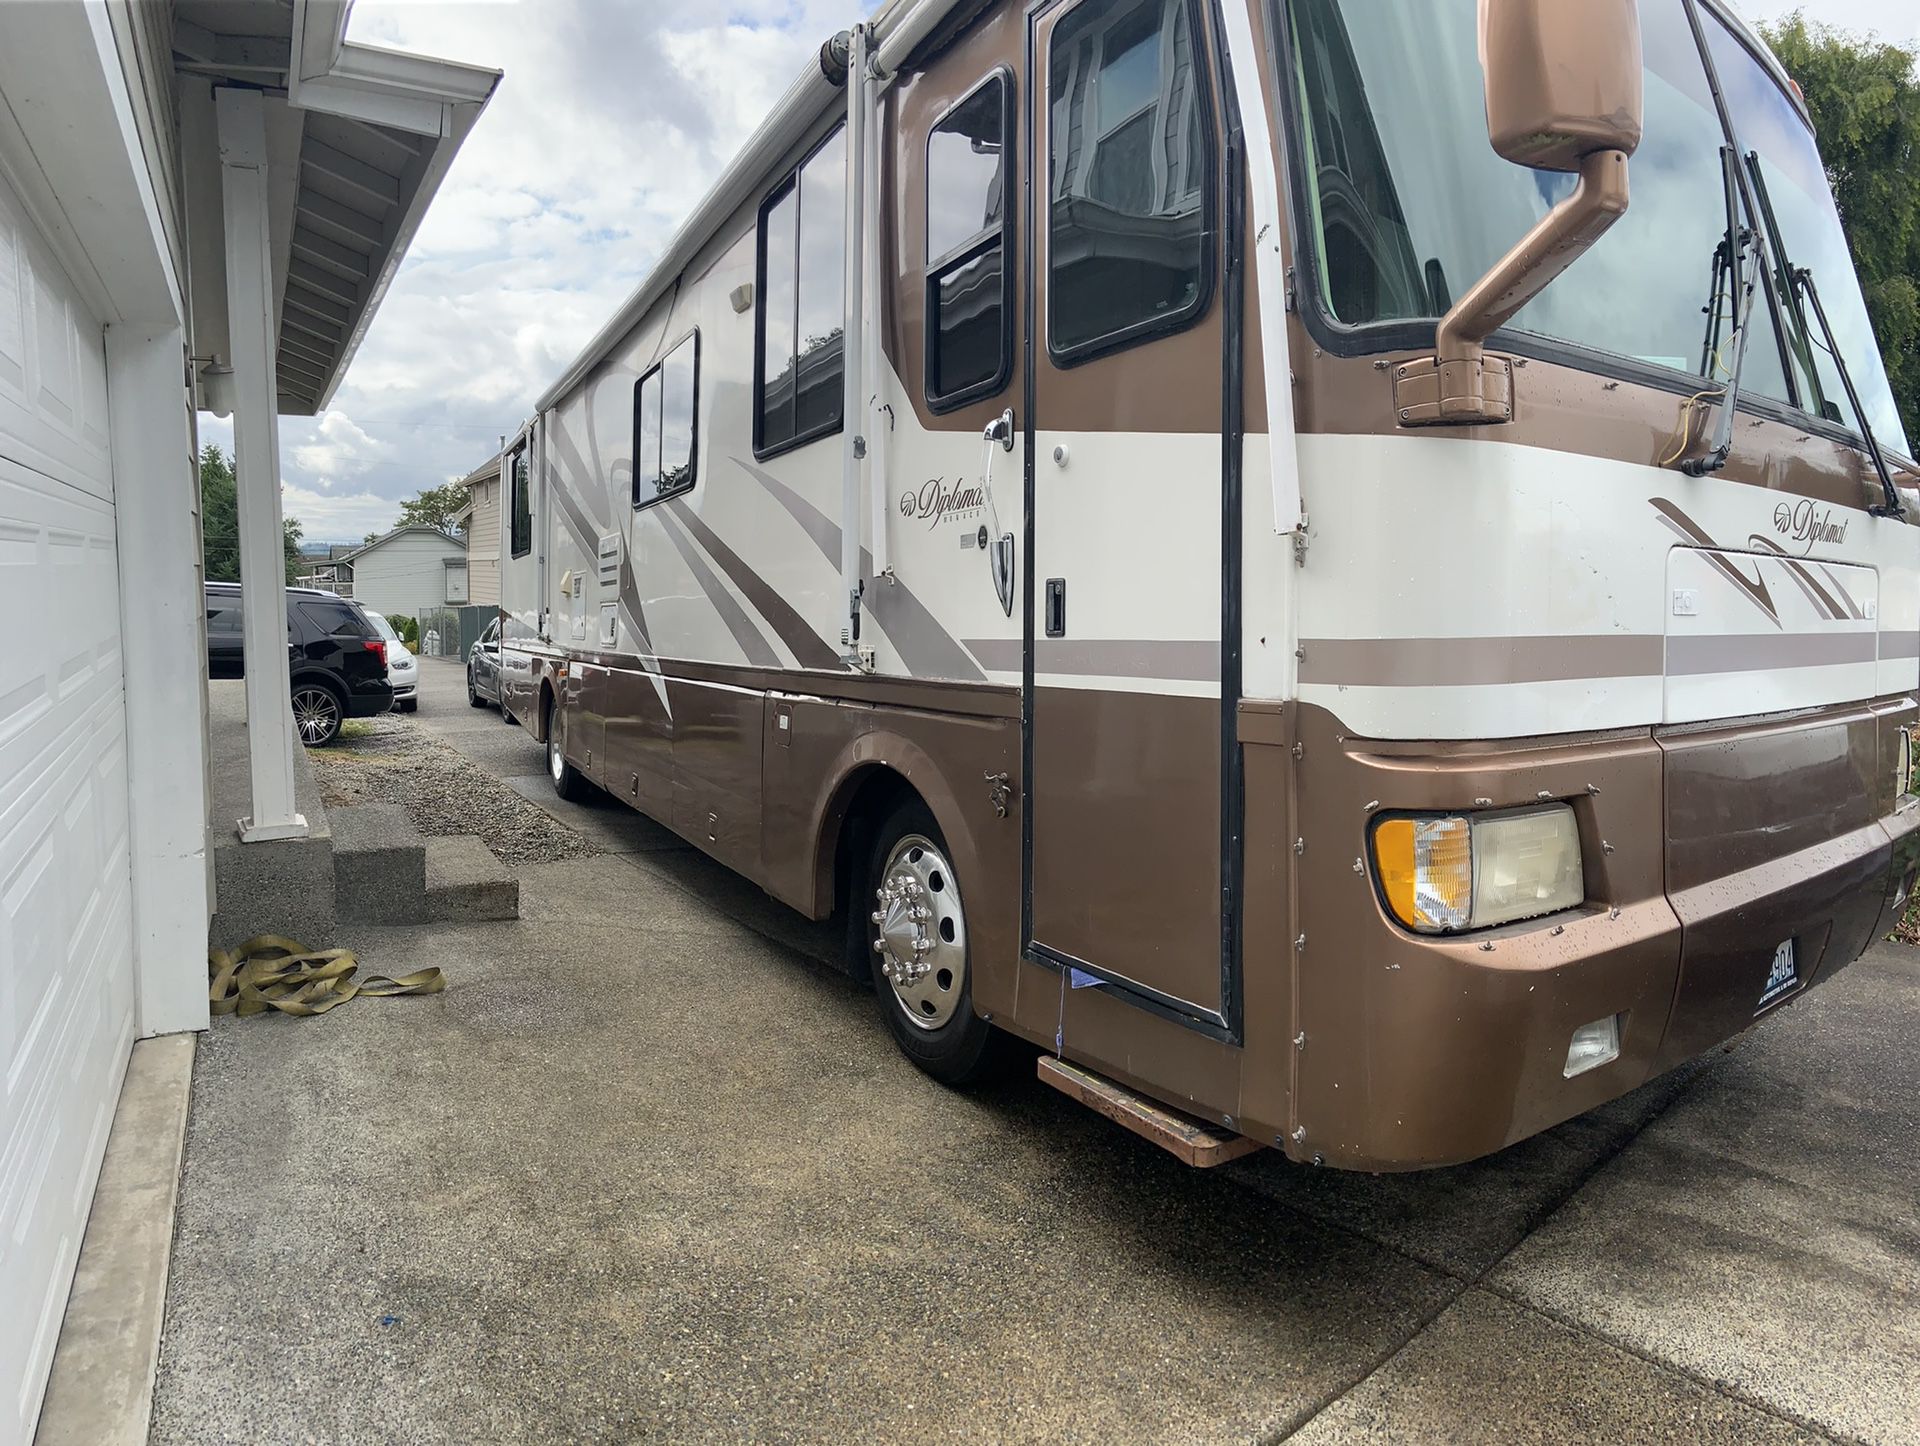 RV camper trailer